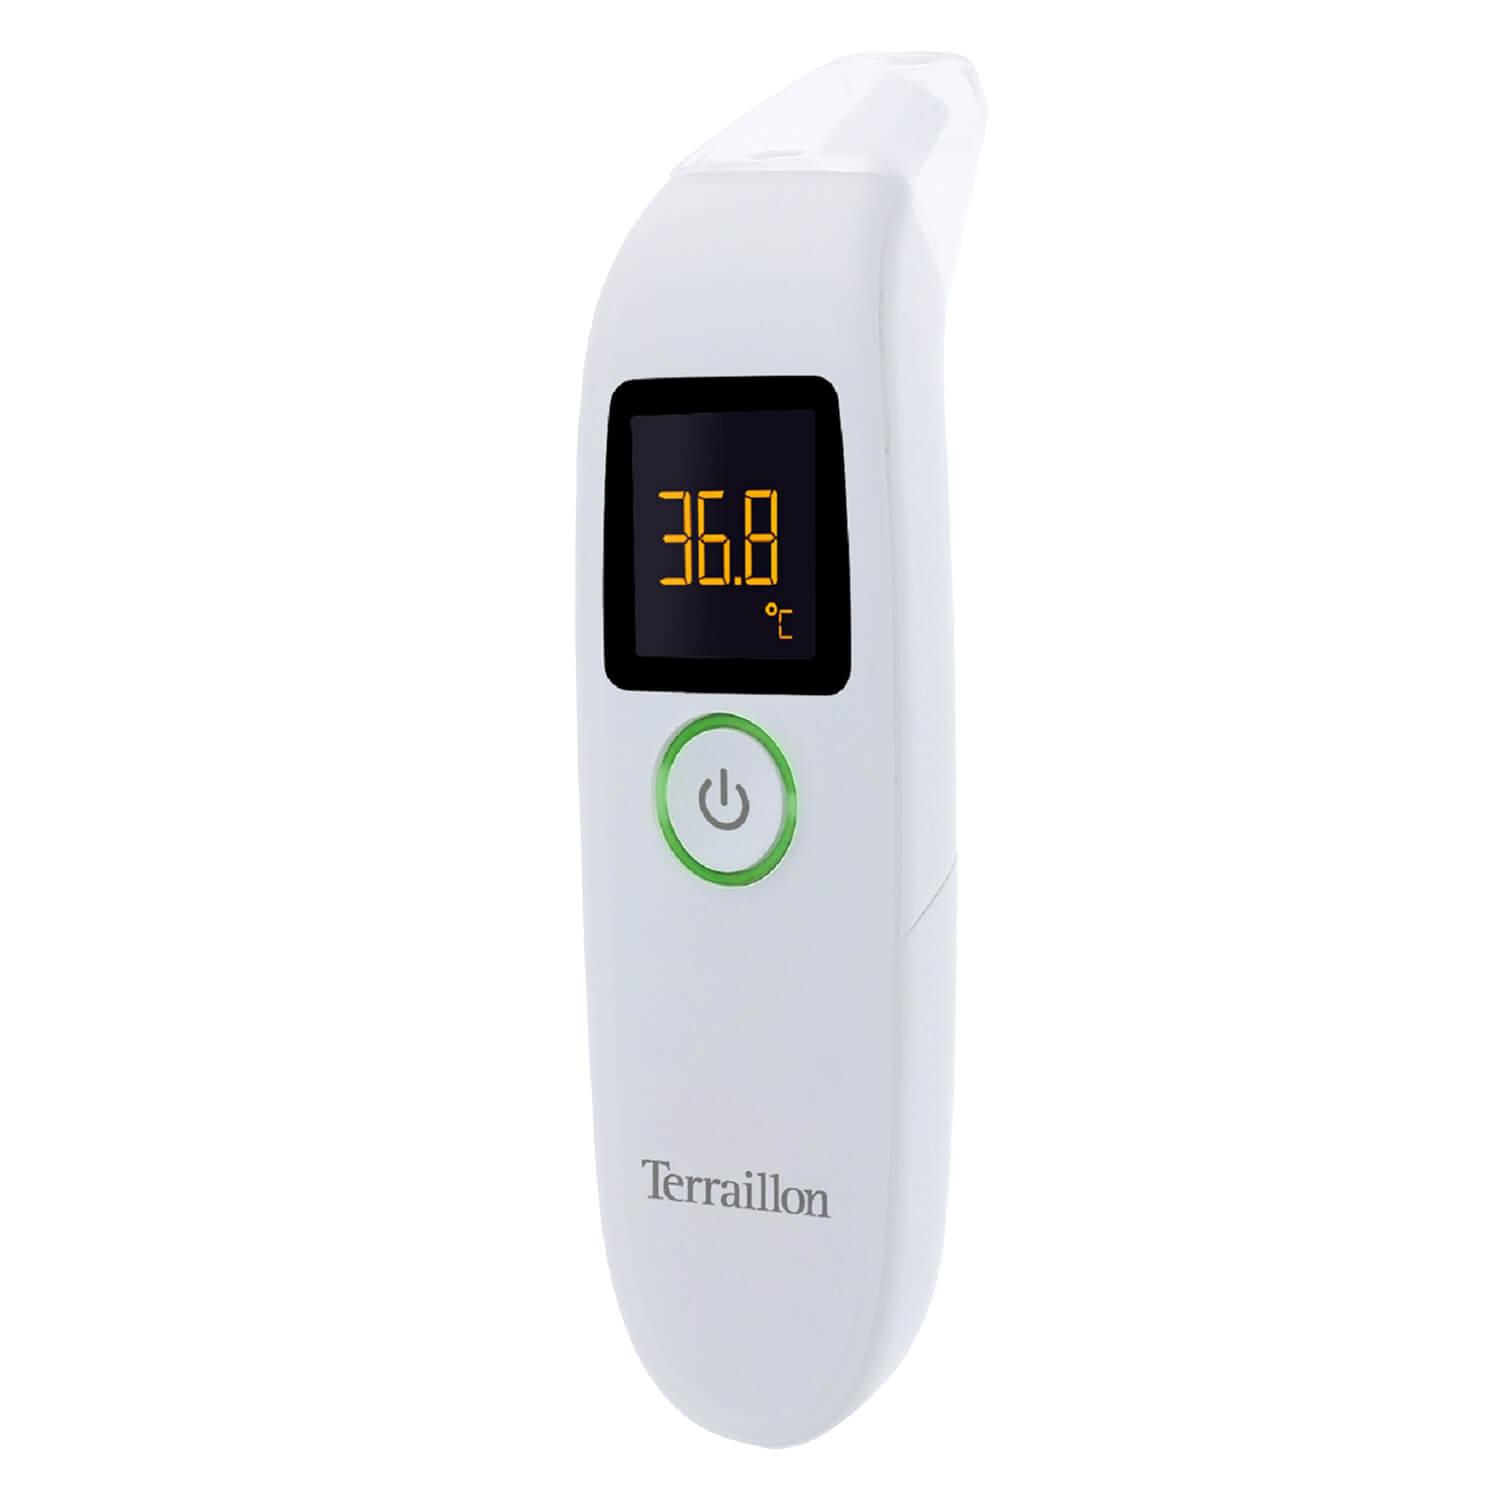 Terraillon - Infrared Thermometer 3 in 1